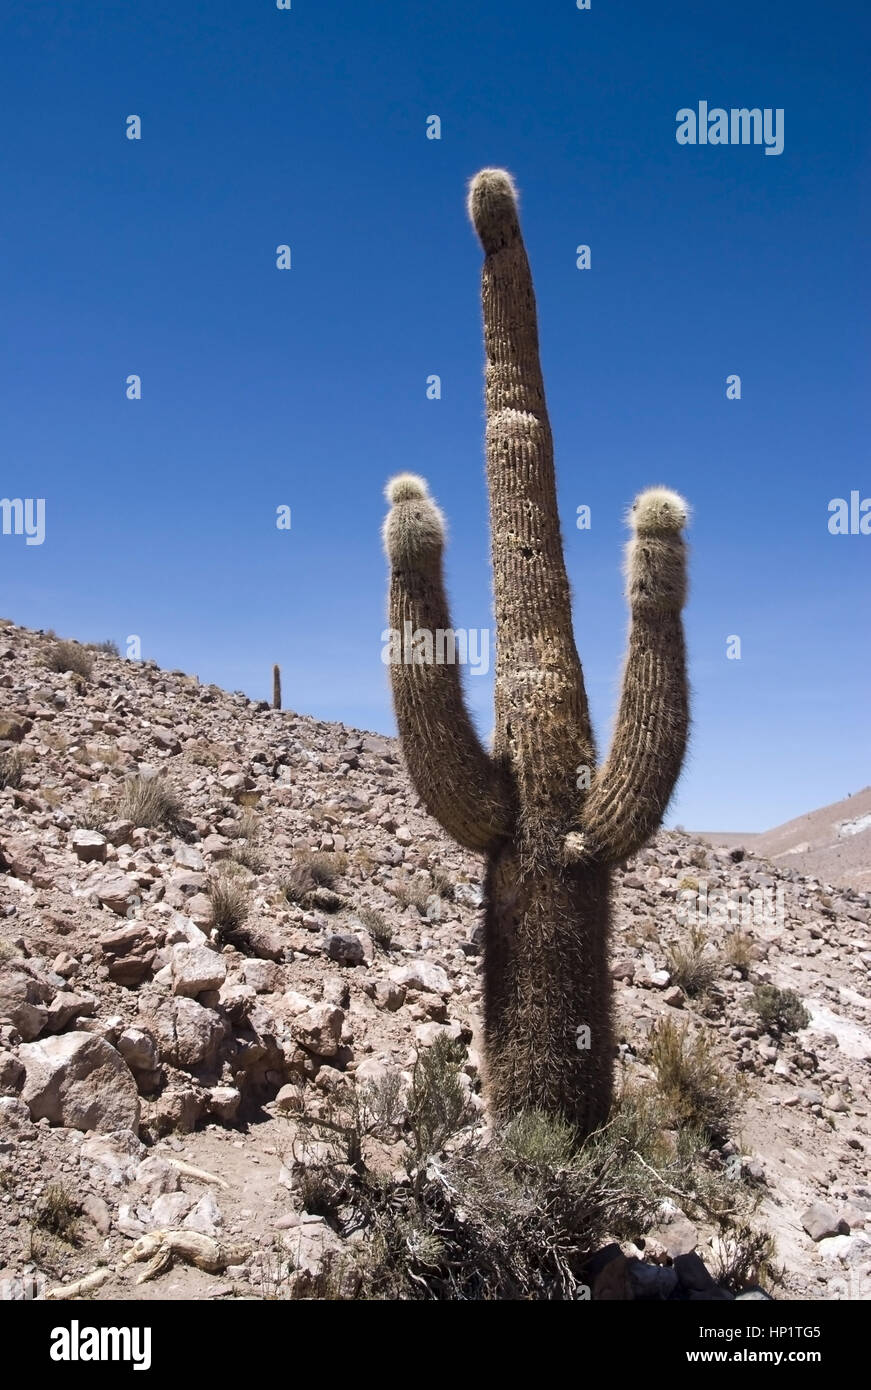 Kakteen in der Atacama-Wueste, Chile, Suedamerika - cactuses in Atacama desert, Chile, South America Stock Photo